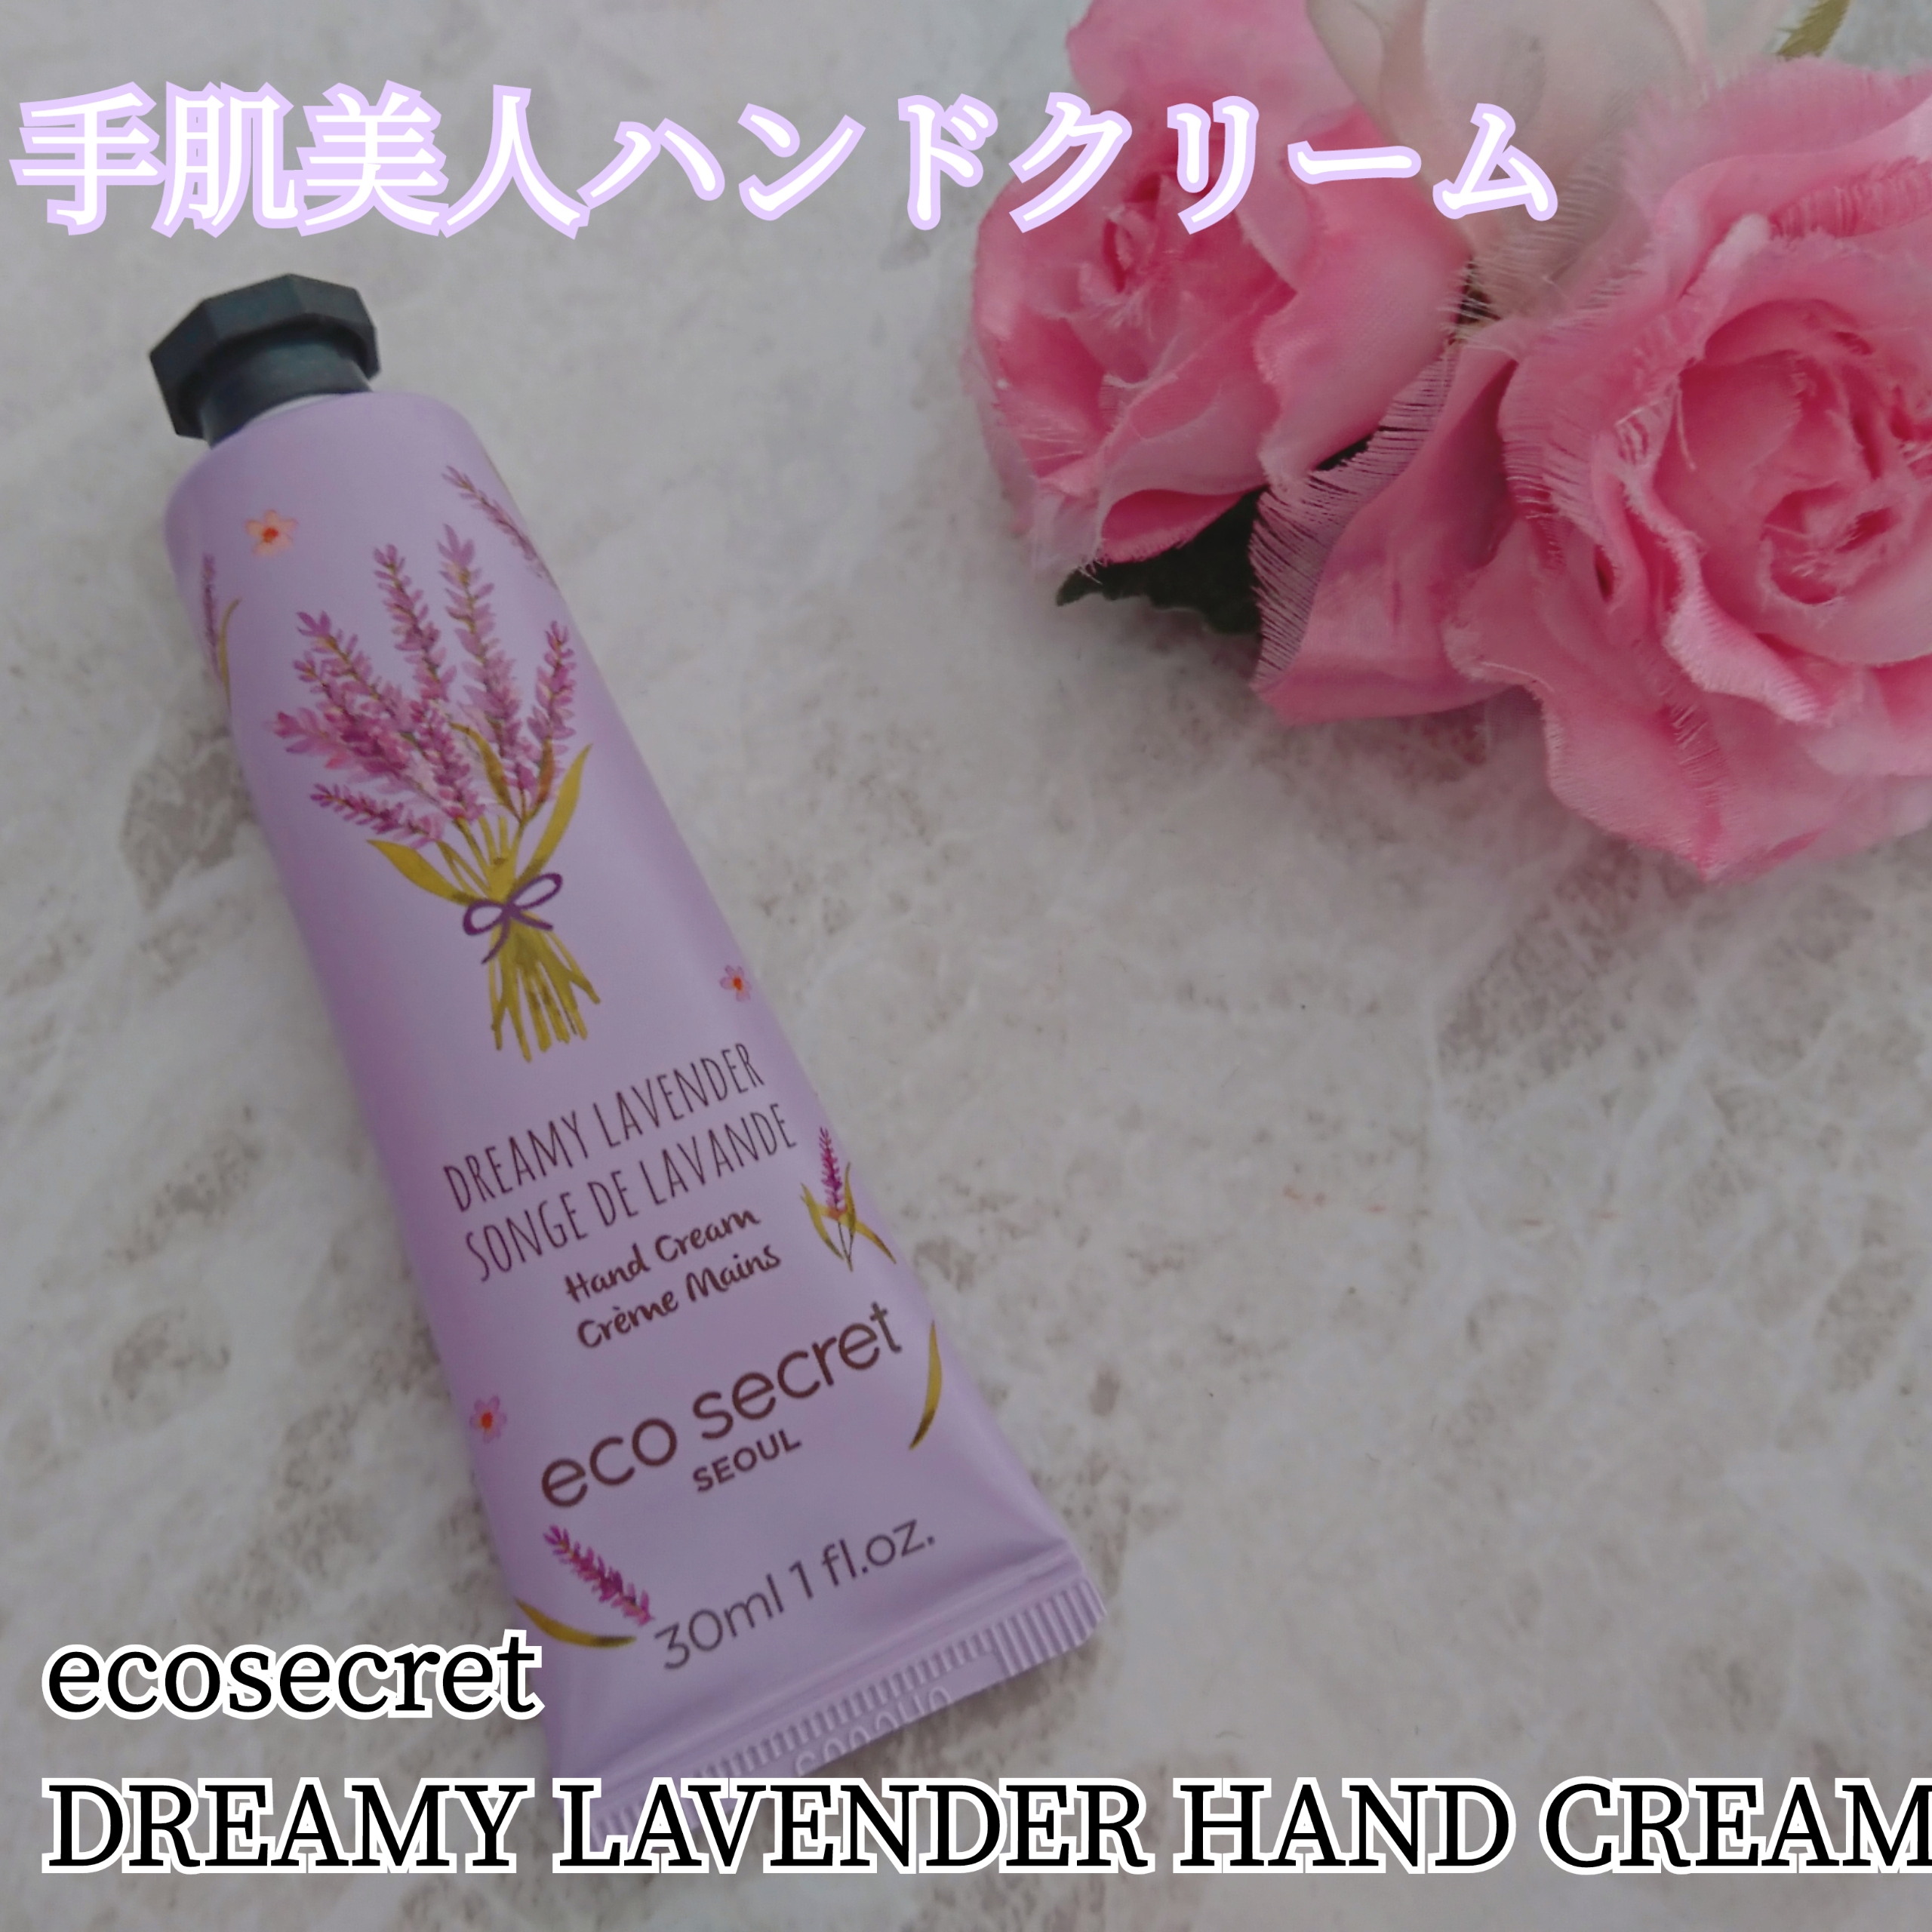 ecosecret DREAMY LAVENDER HAND CREAM手肌美人ハンドクリームを使ったYuKaRi♡さんのクチコミ画像1